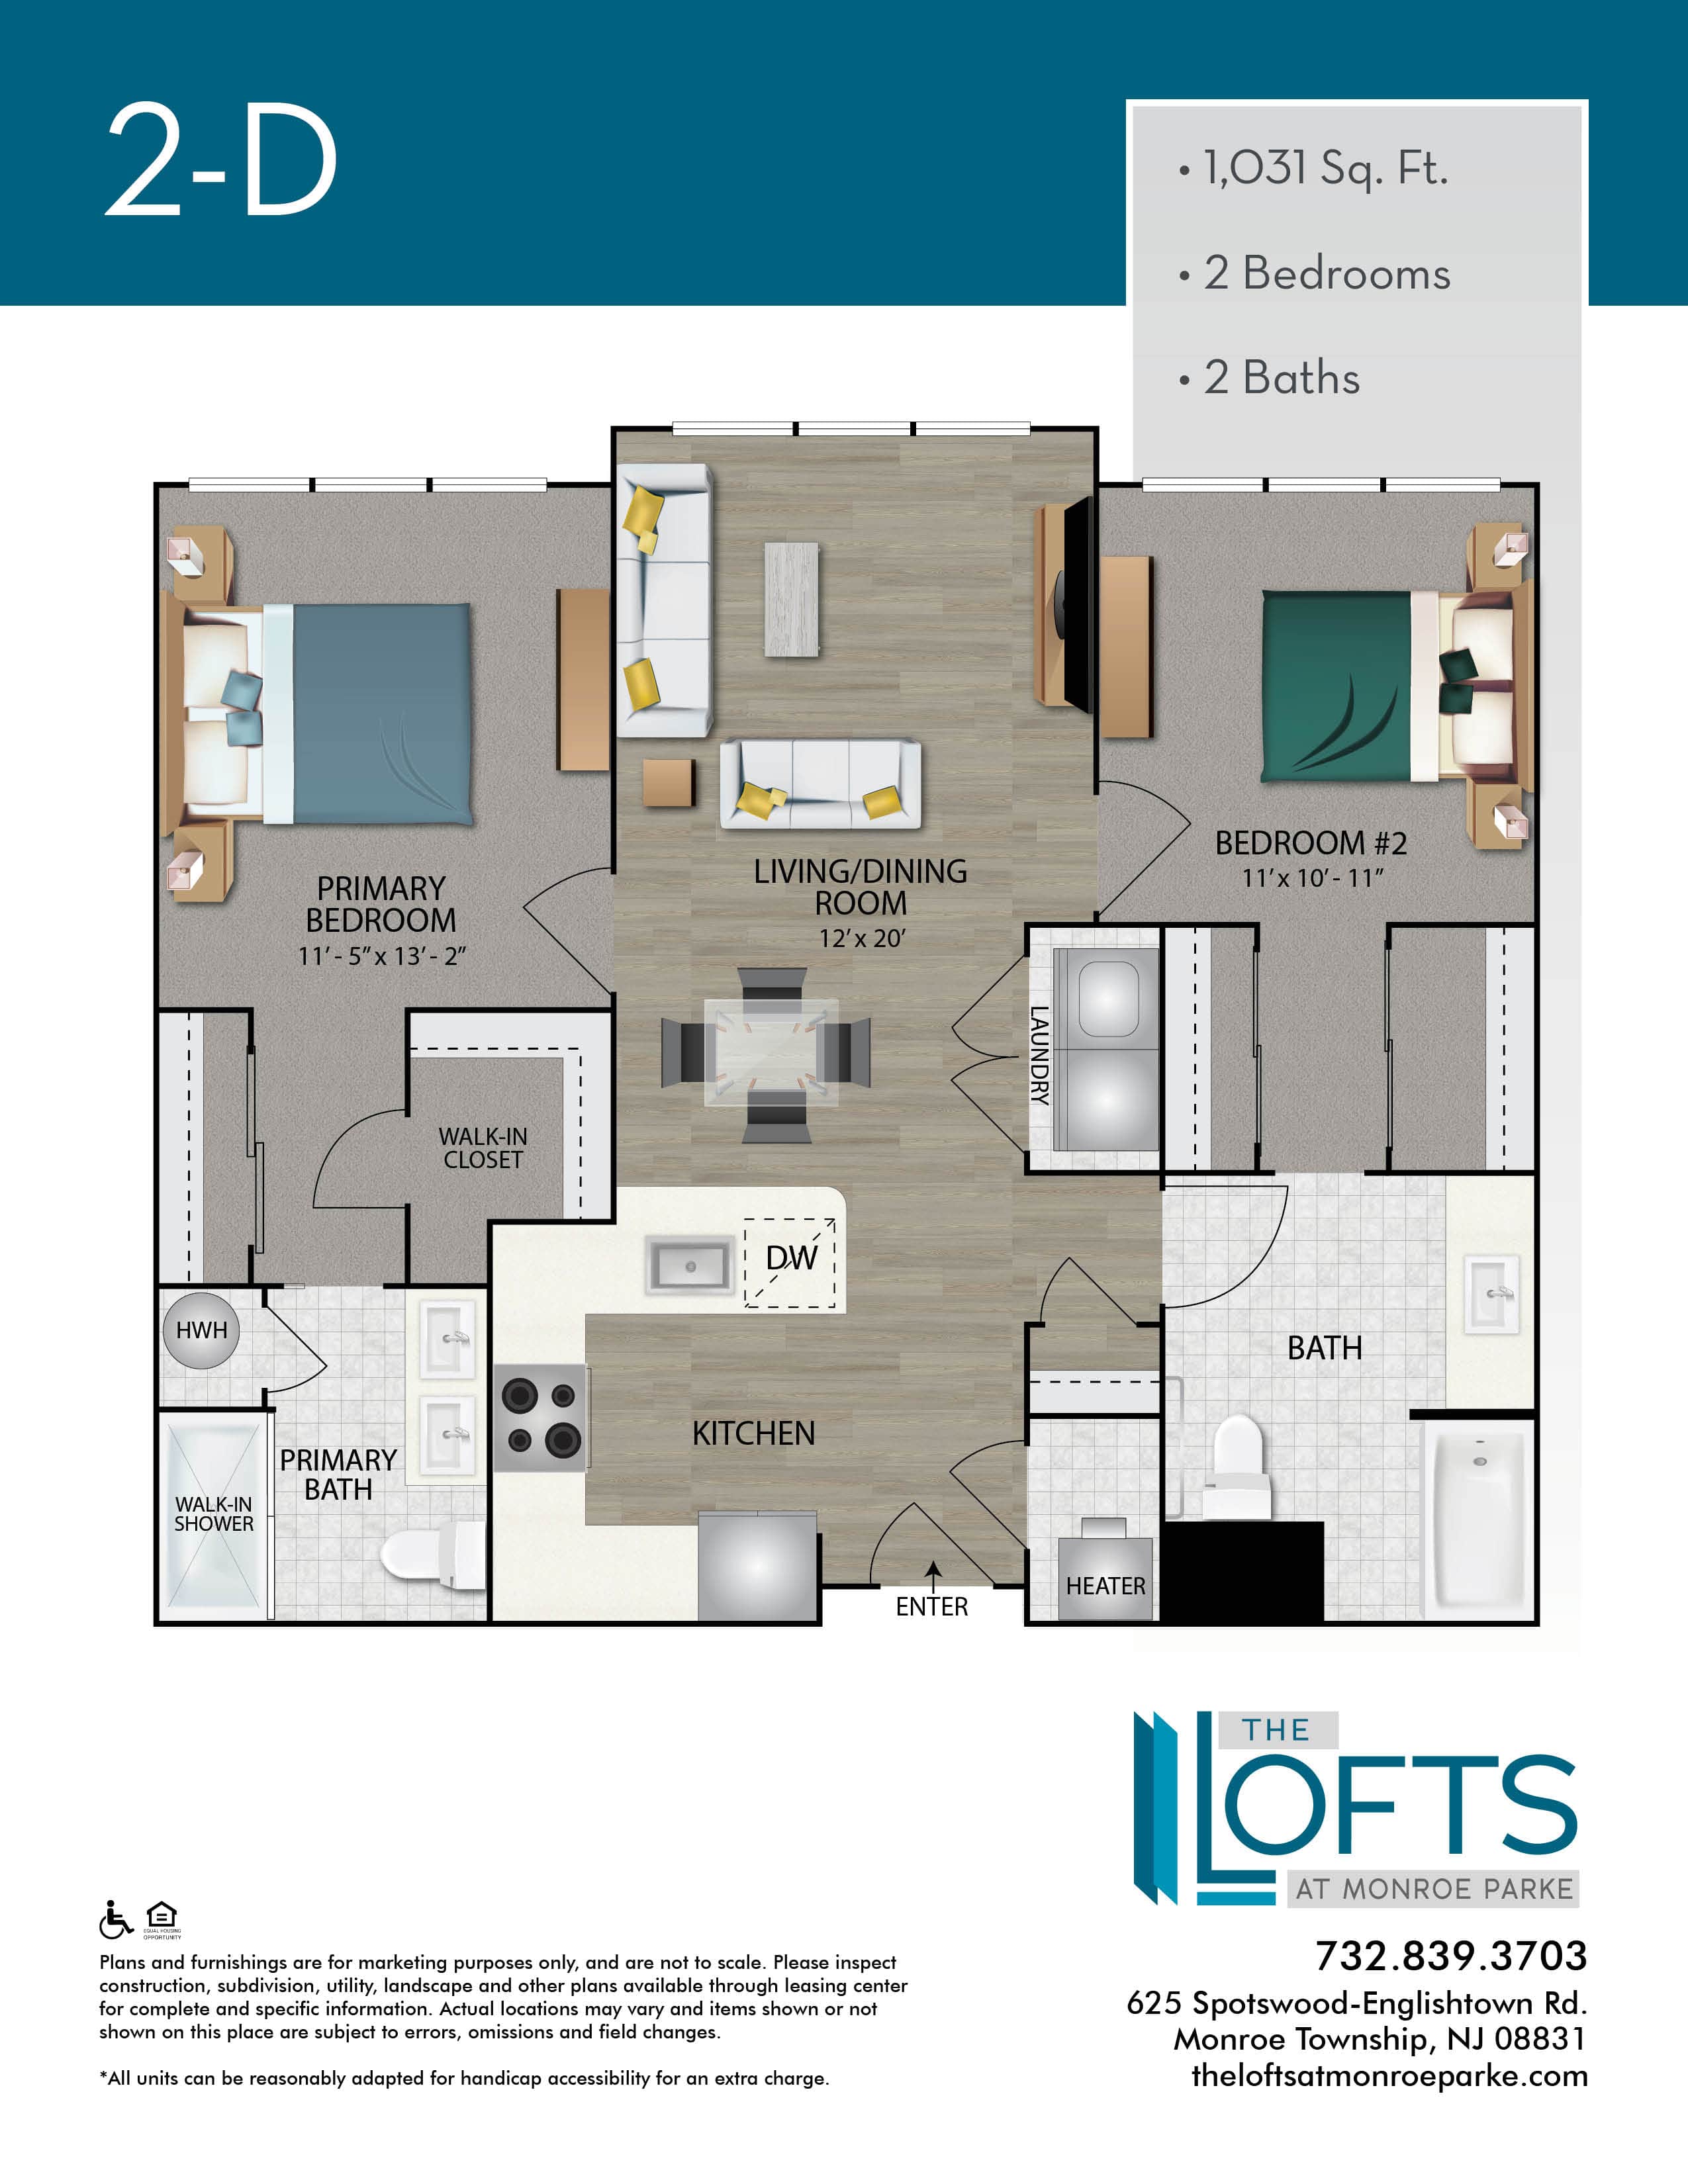 The Lofts at Monroe Park Apartment Floor Plan 2D